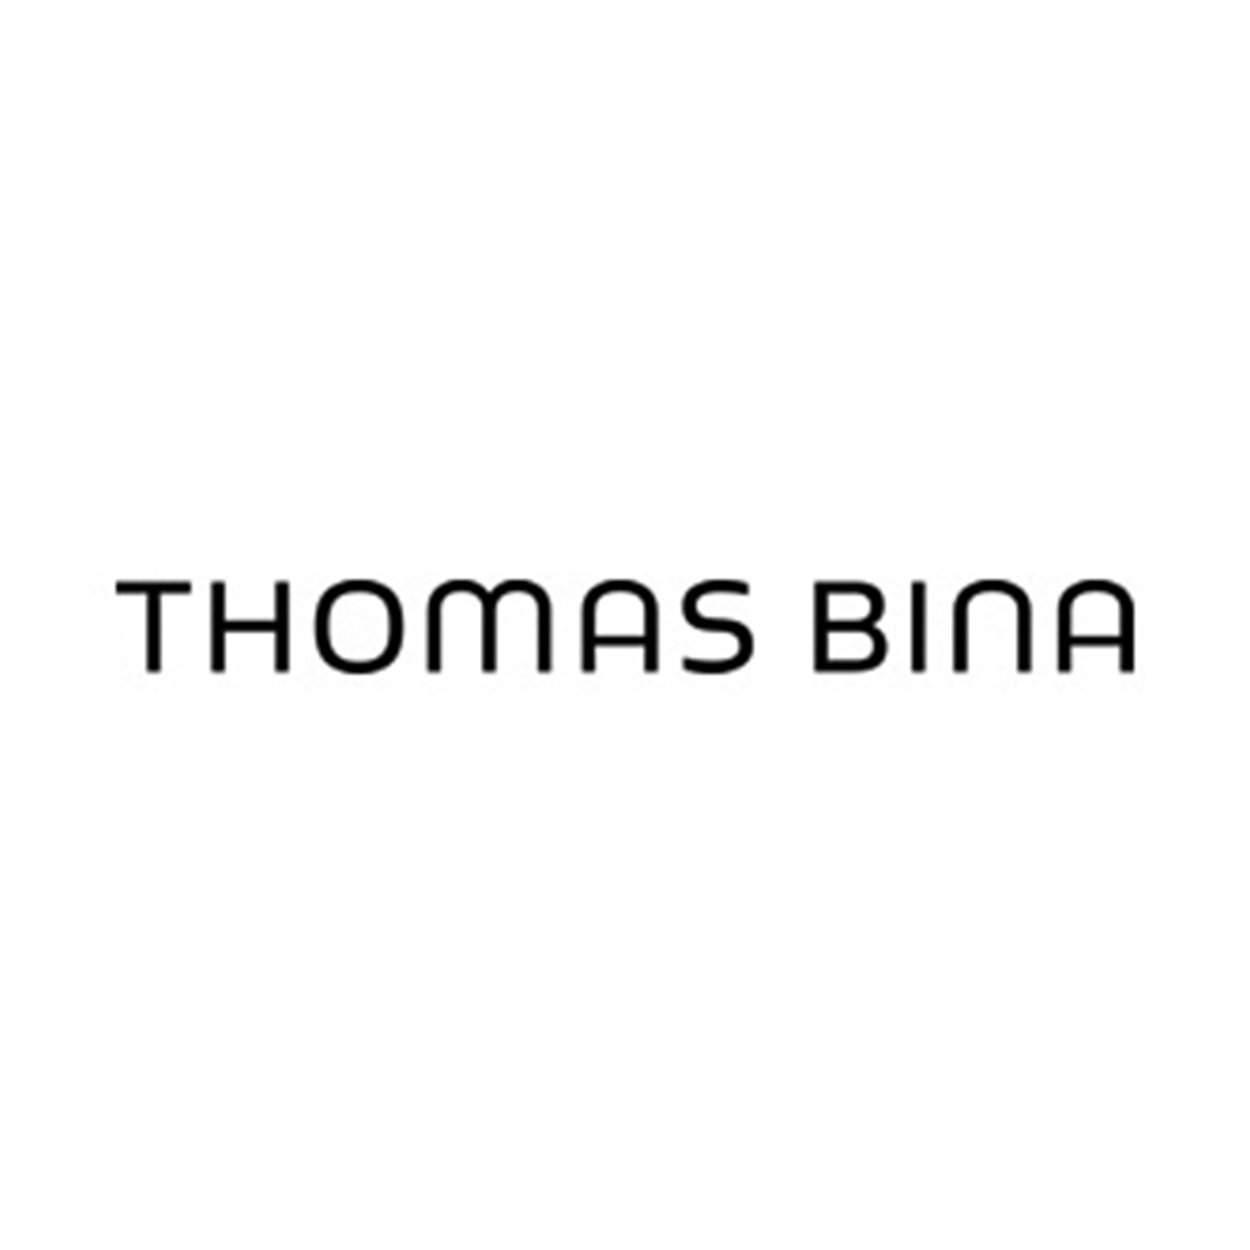 Thomas Bina.jpg